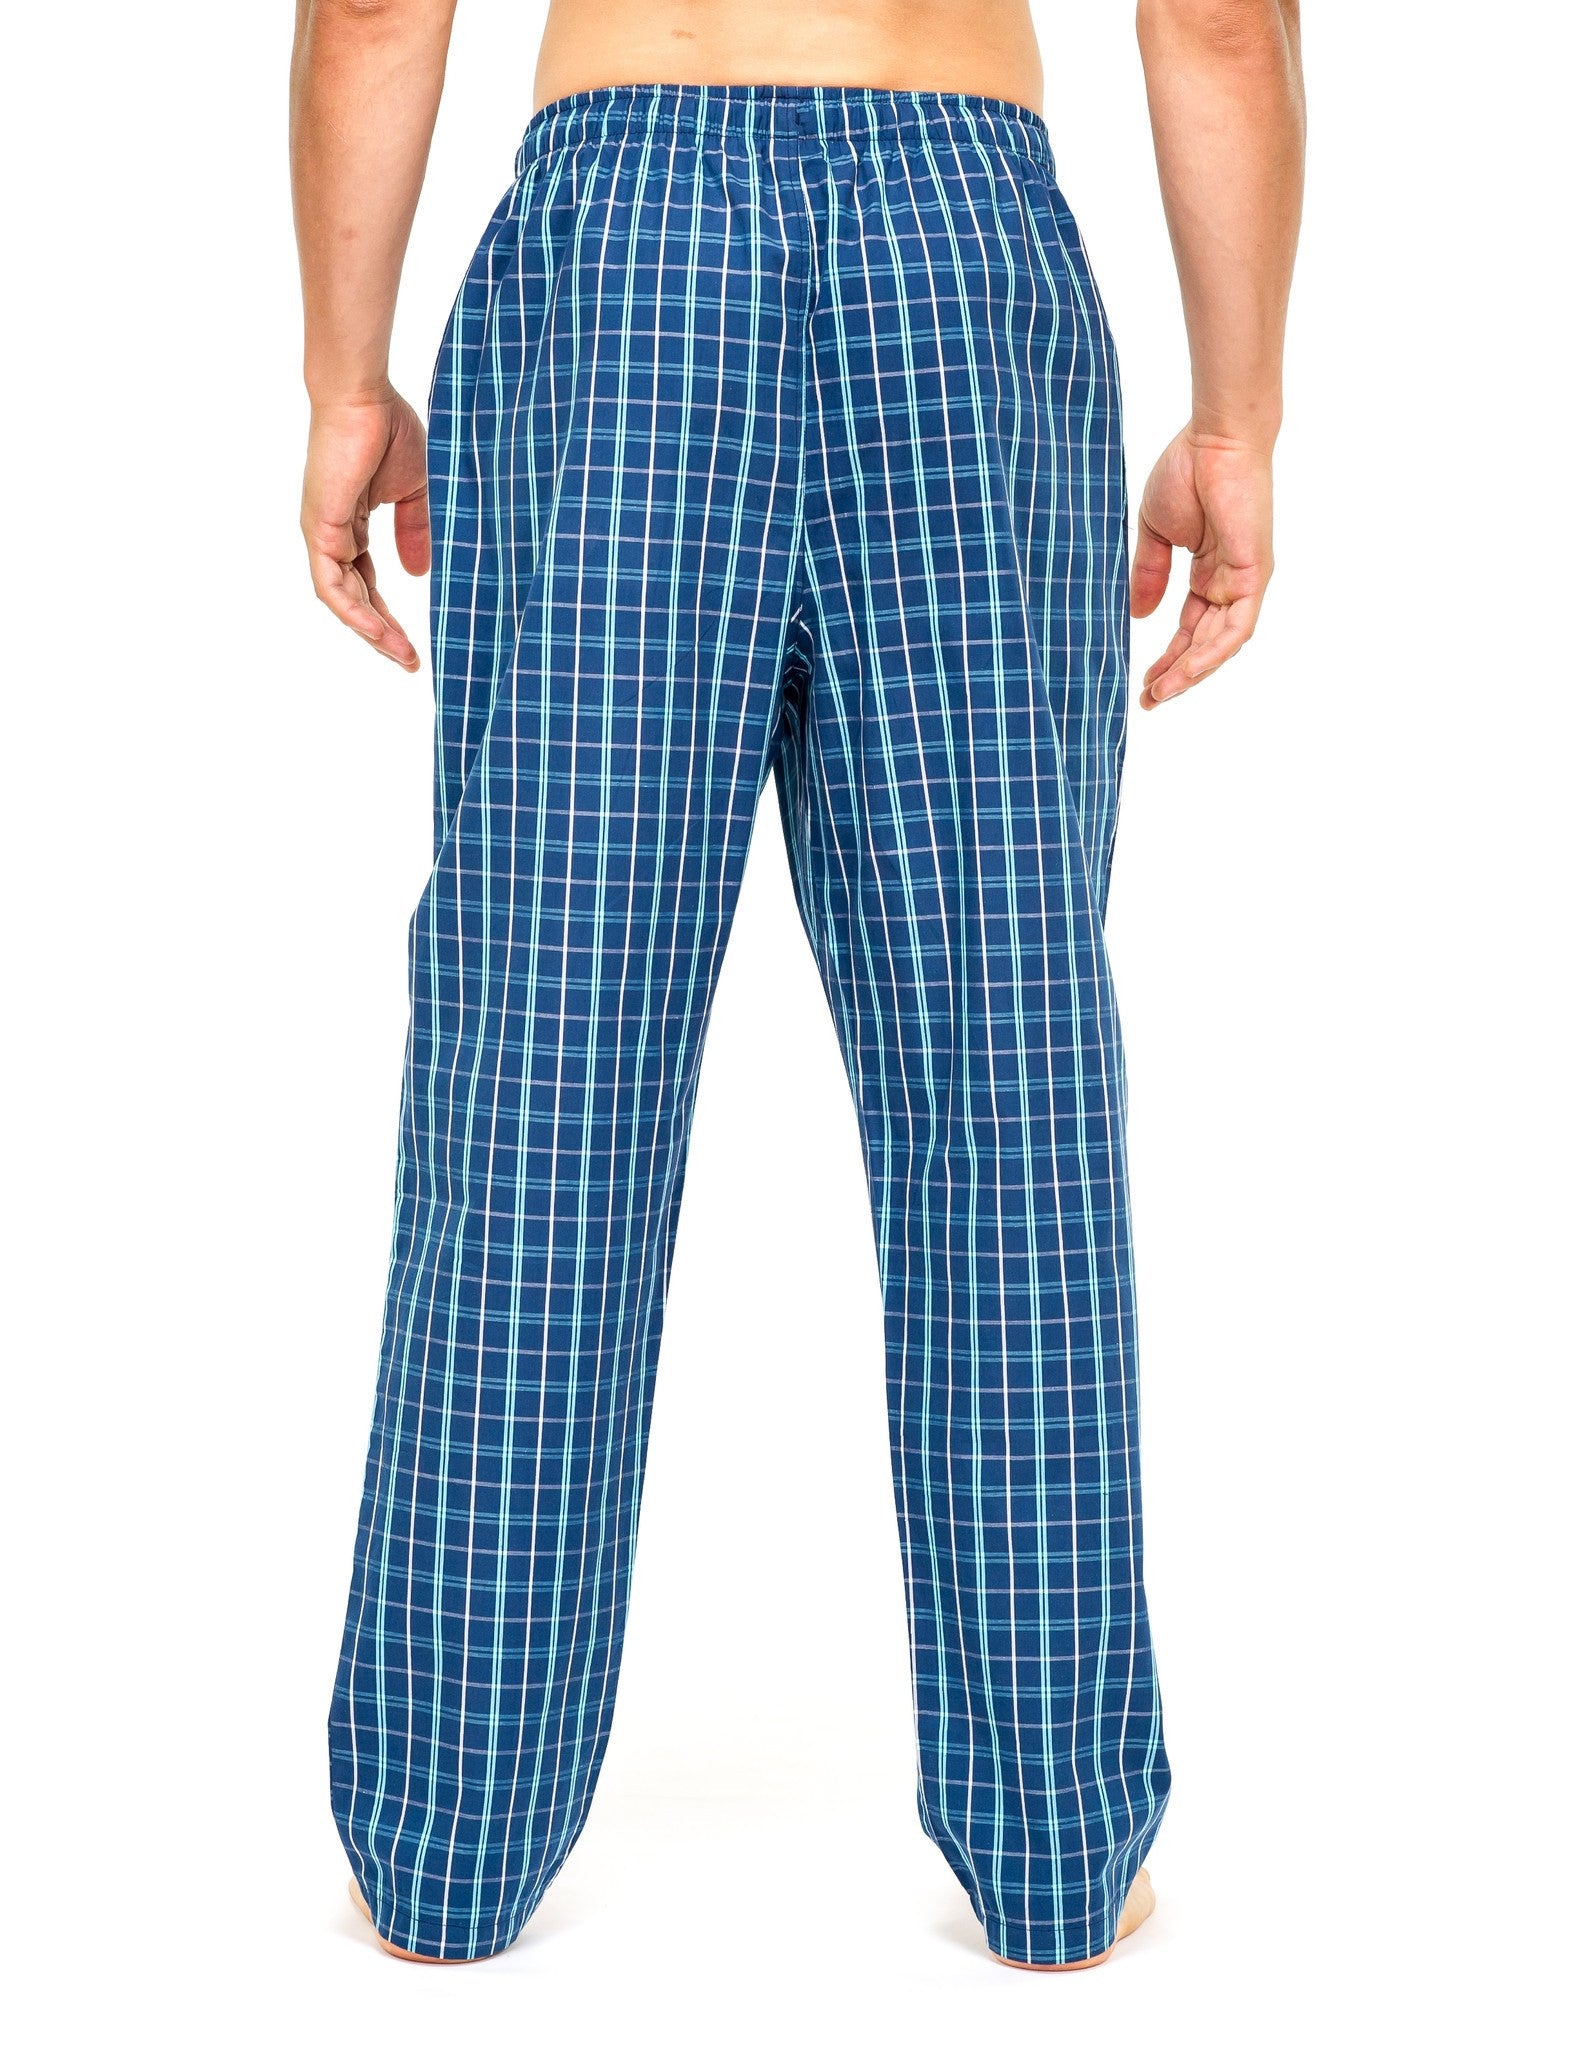 Men's Premium Cotton Lounge/Sleep Pants - 2 Pack – Noble Mount